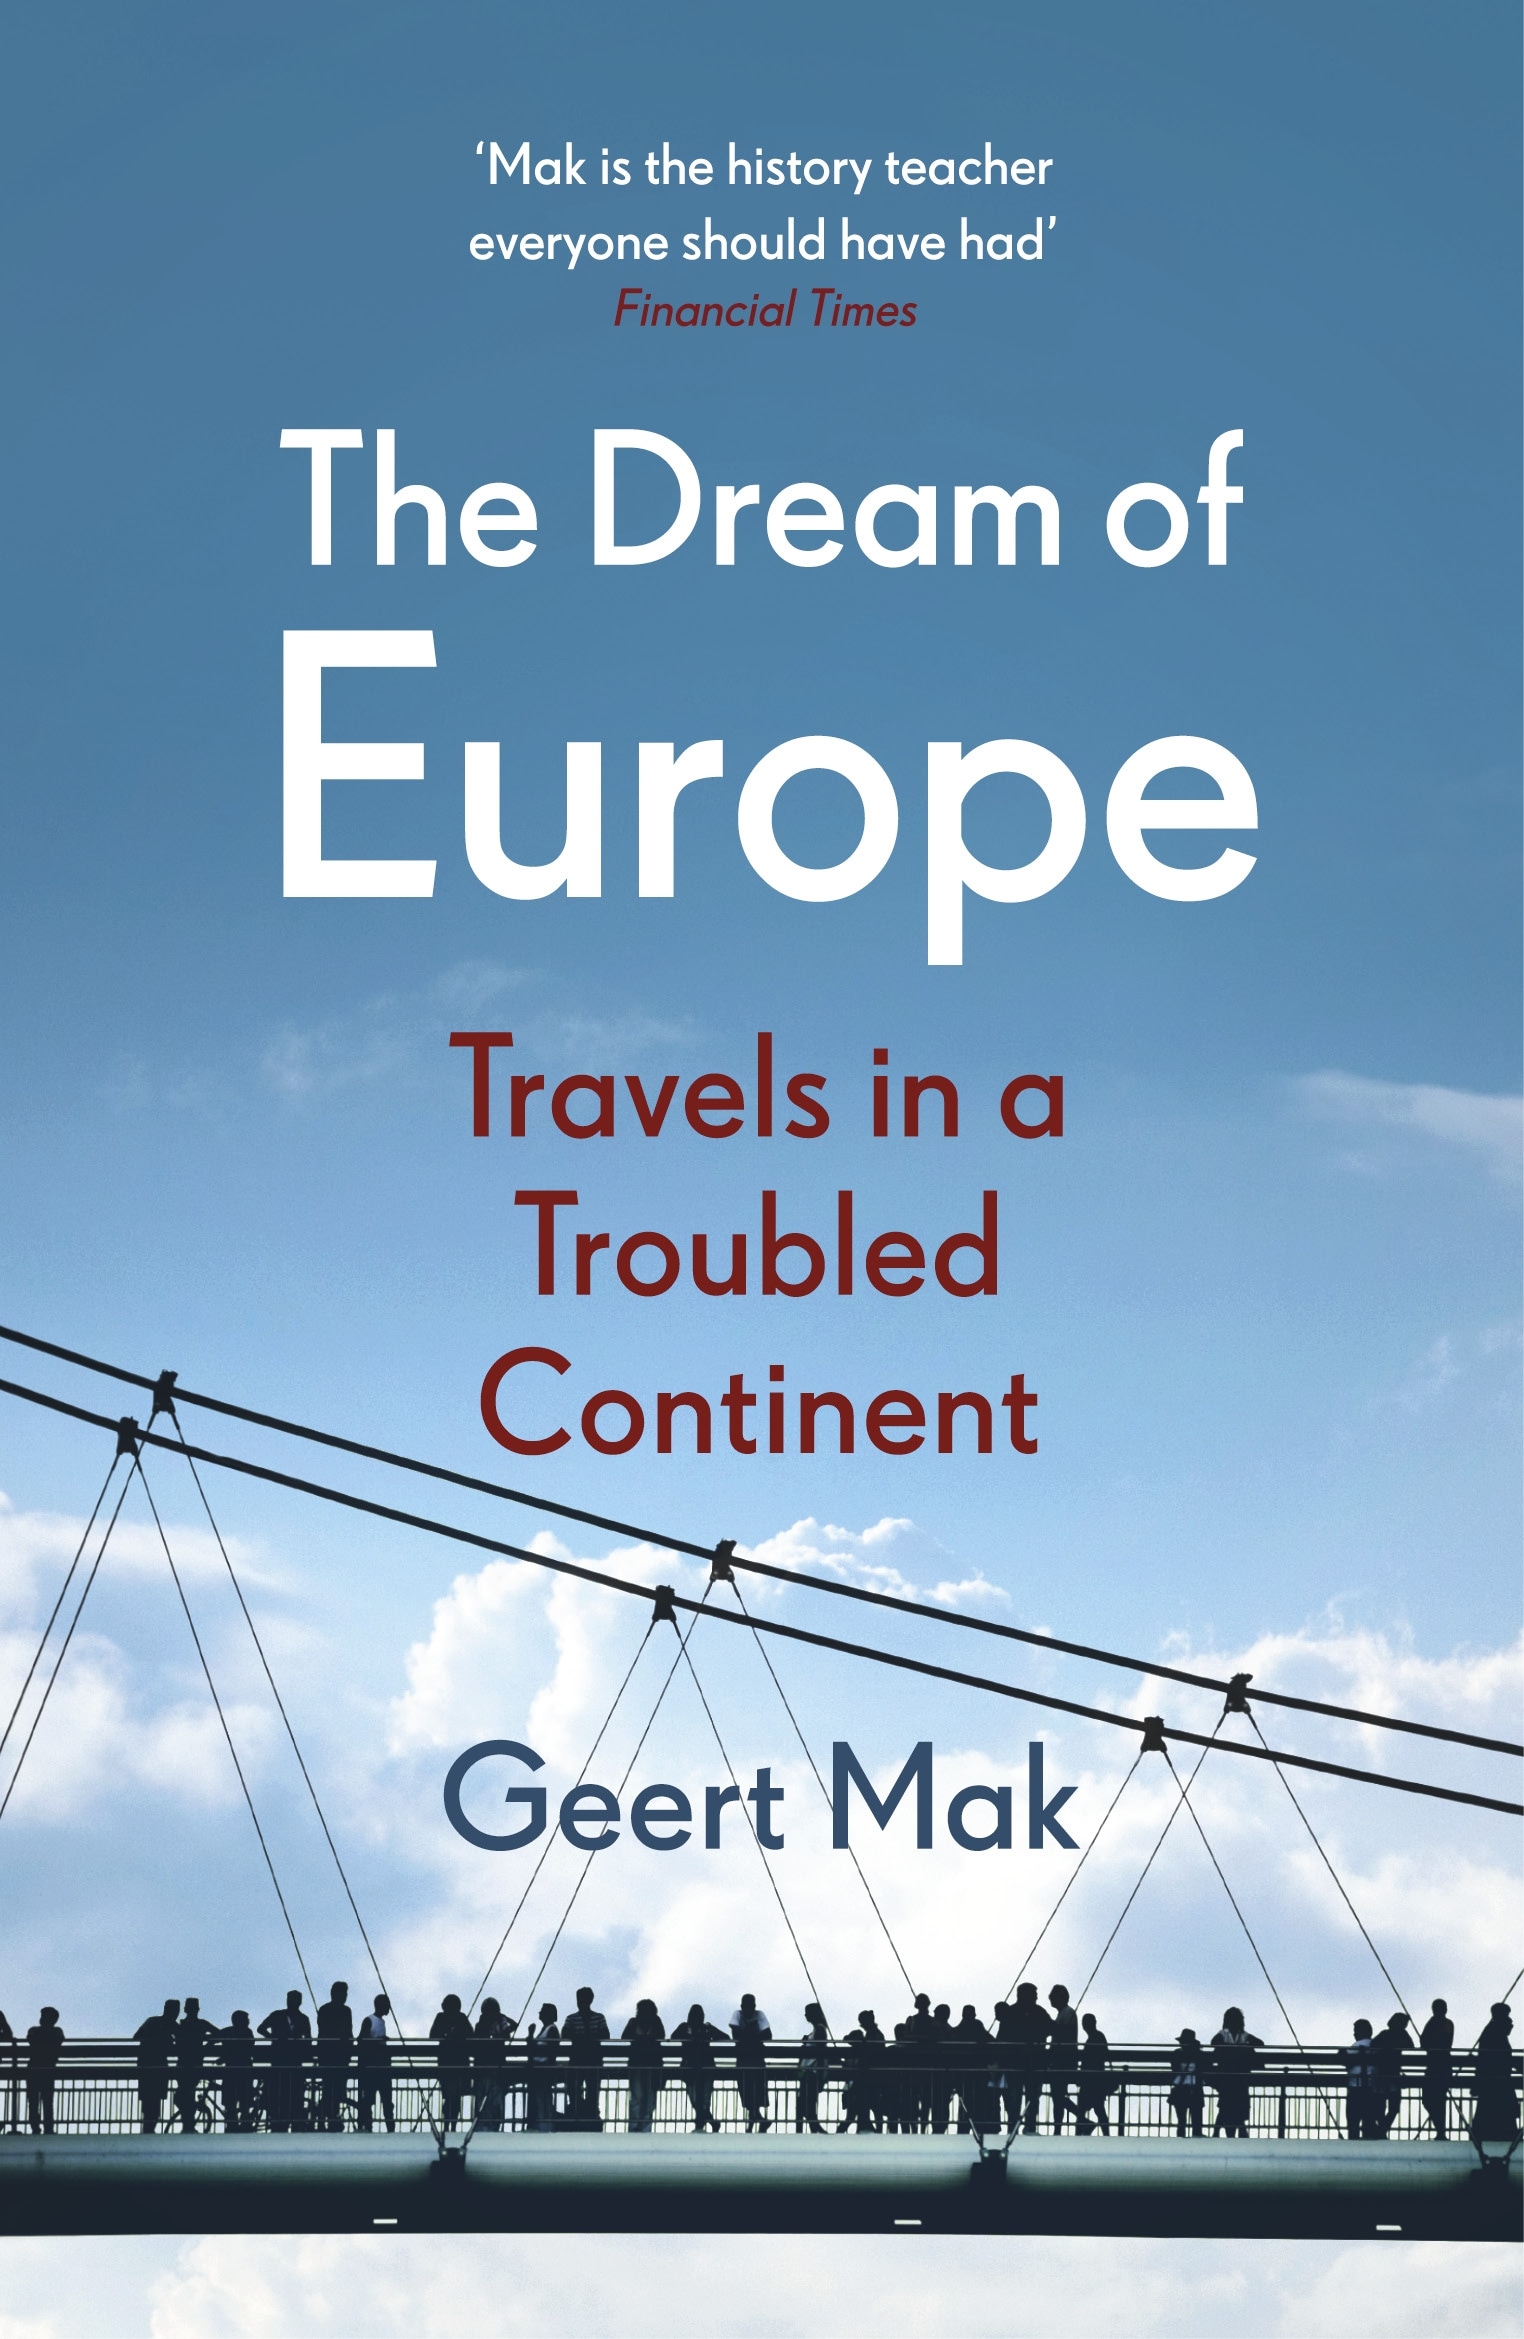 Book “The Dream of Europe” by Geert Mak — October 27, 2022